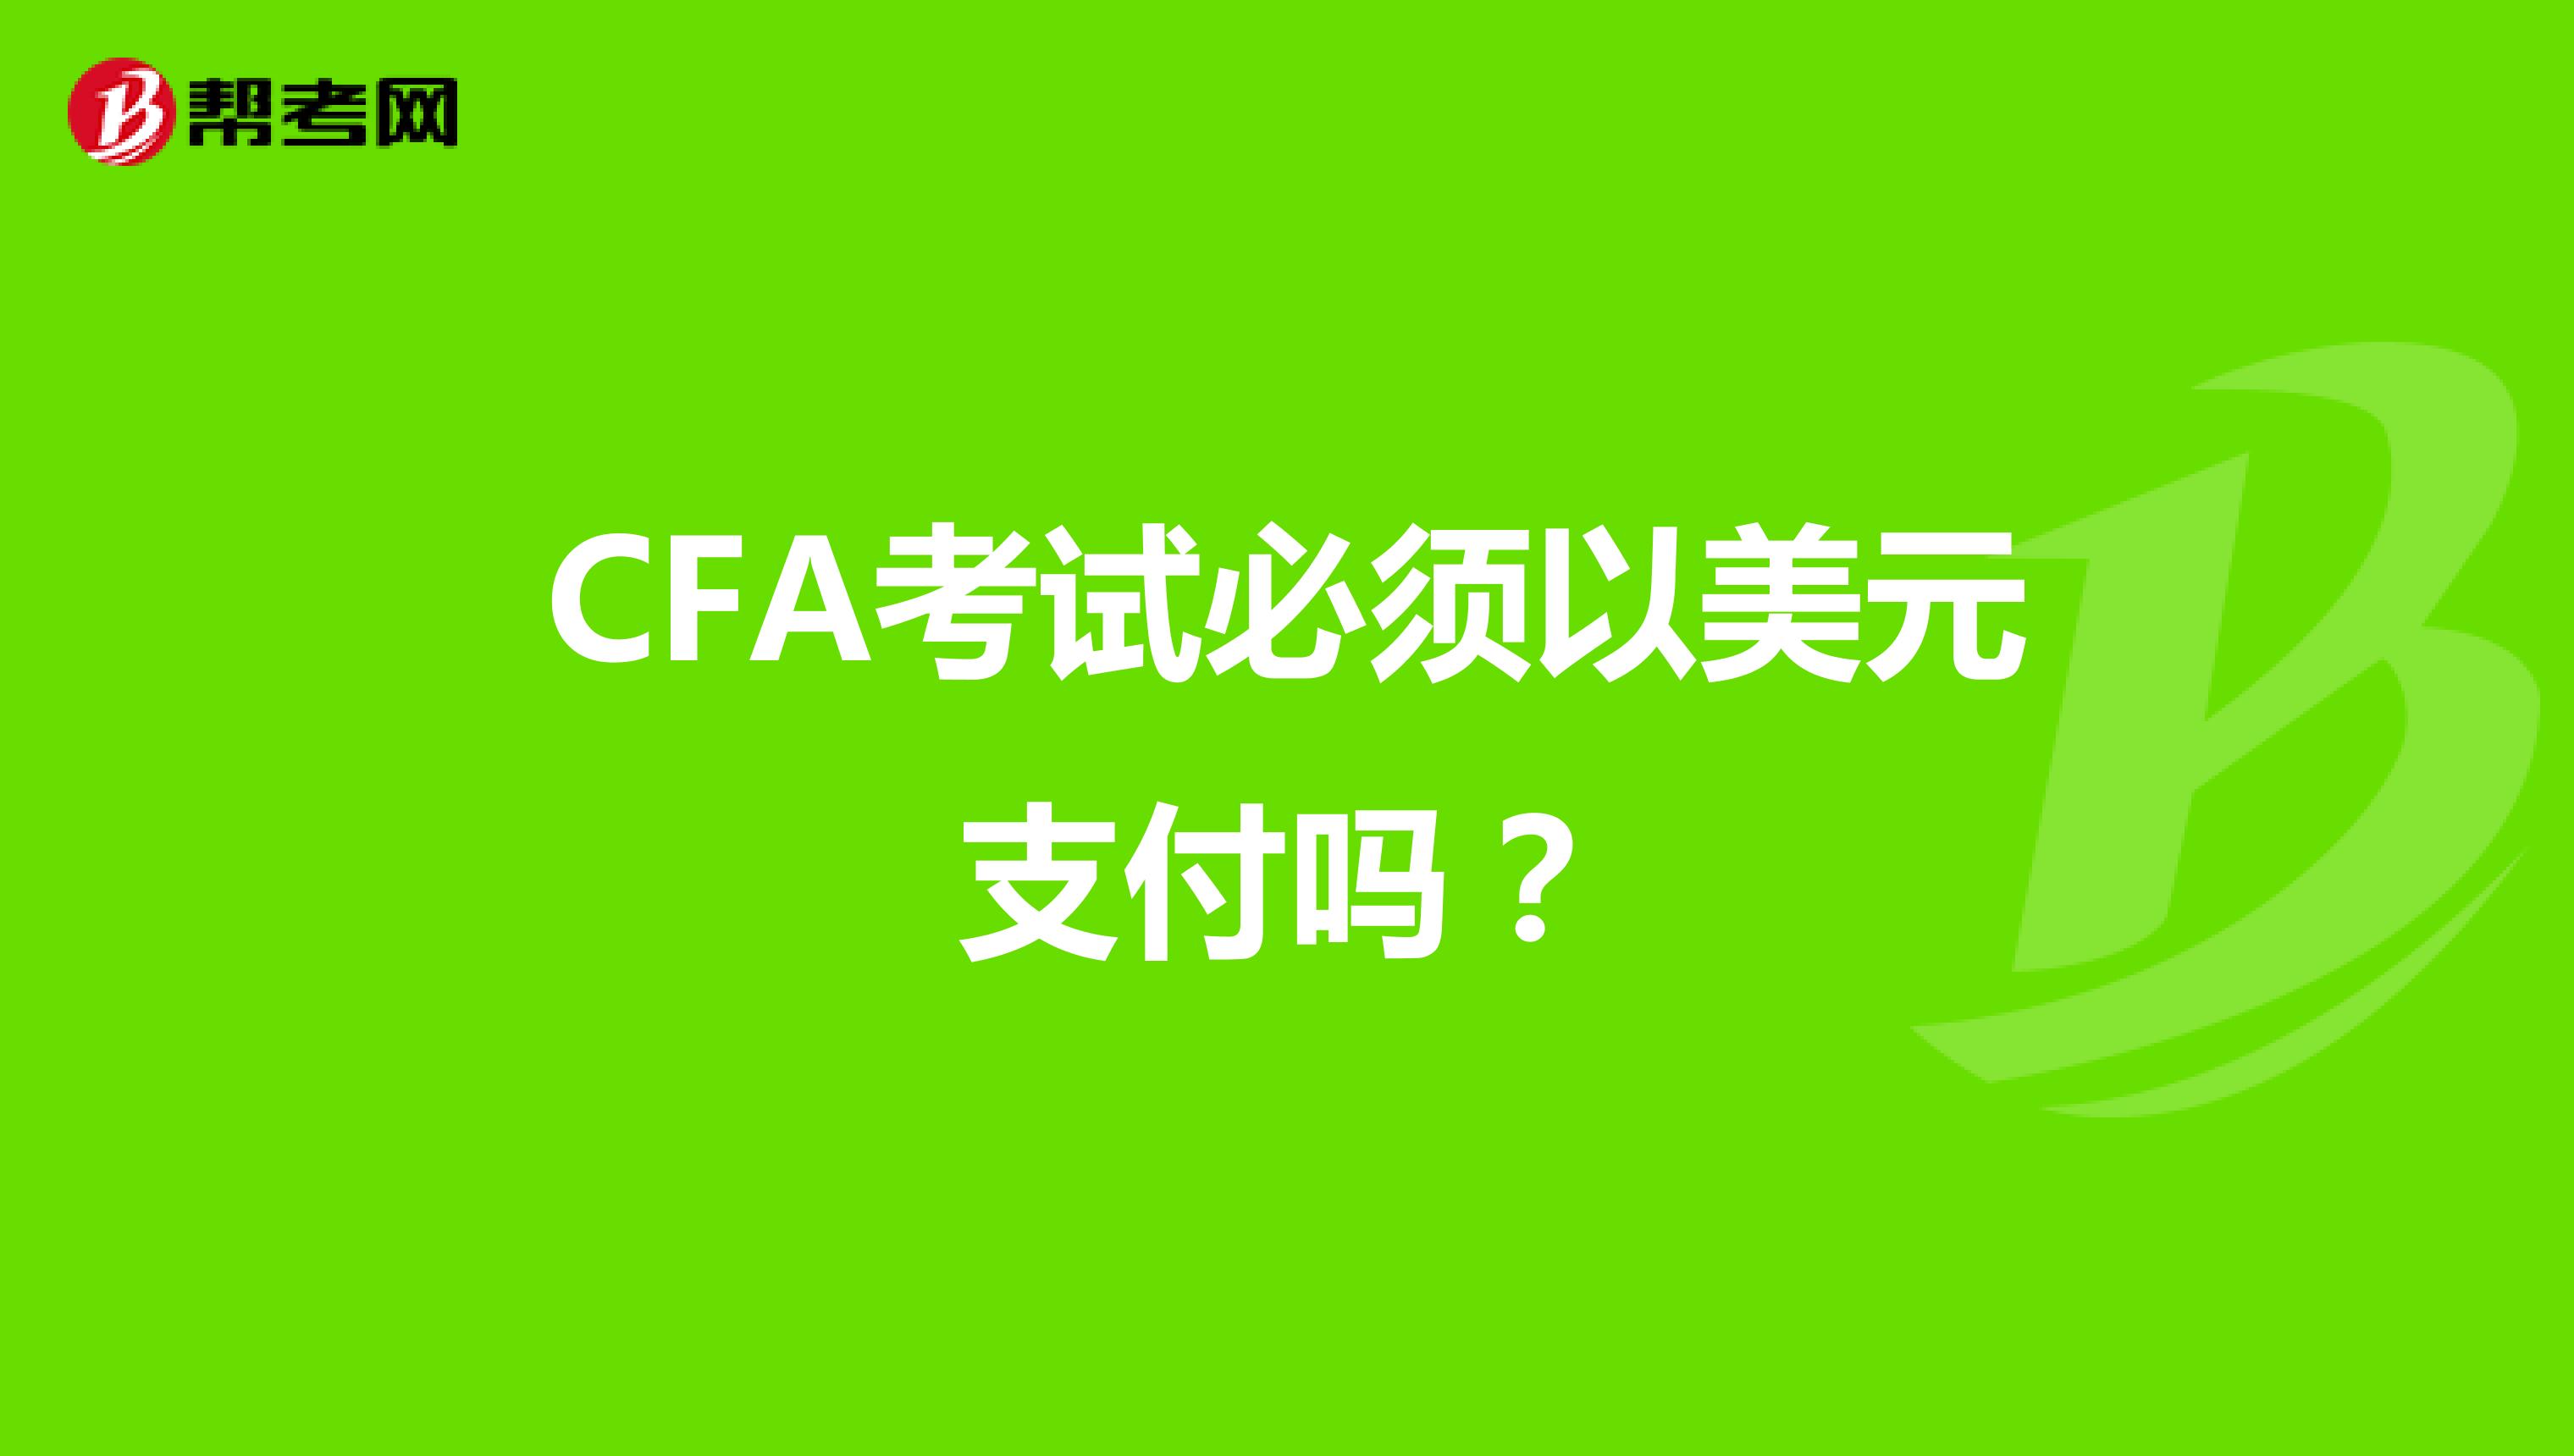 CFA考试必须以美元支付吗？